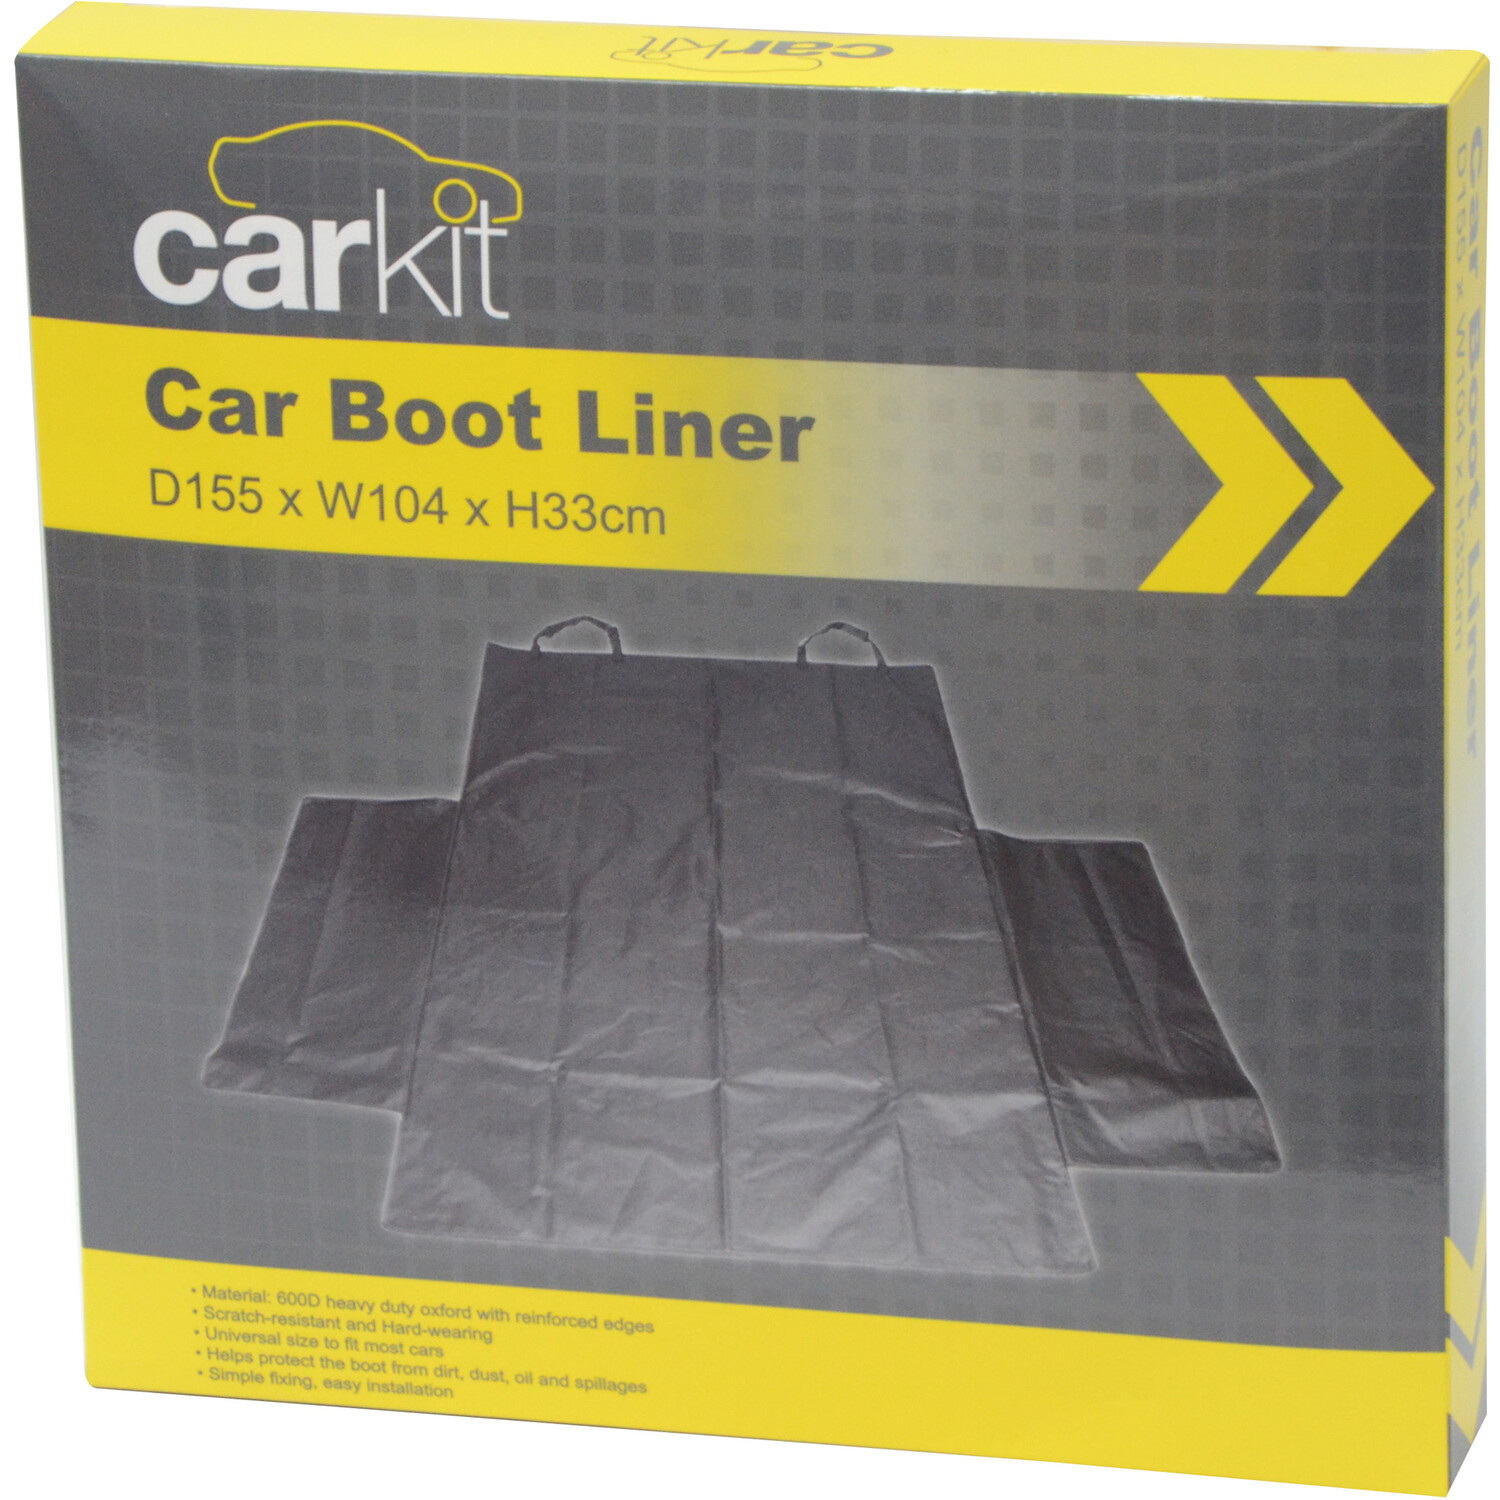 CarKit Car Boot Liner Image 1